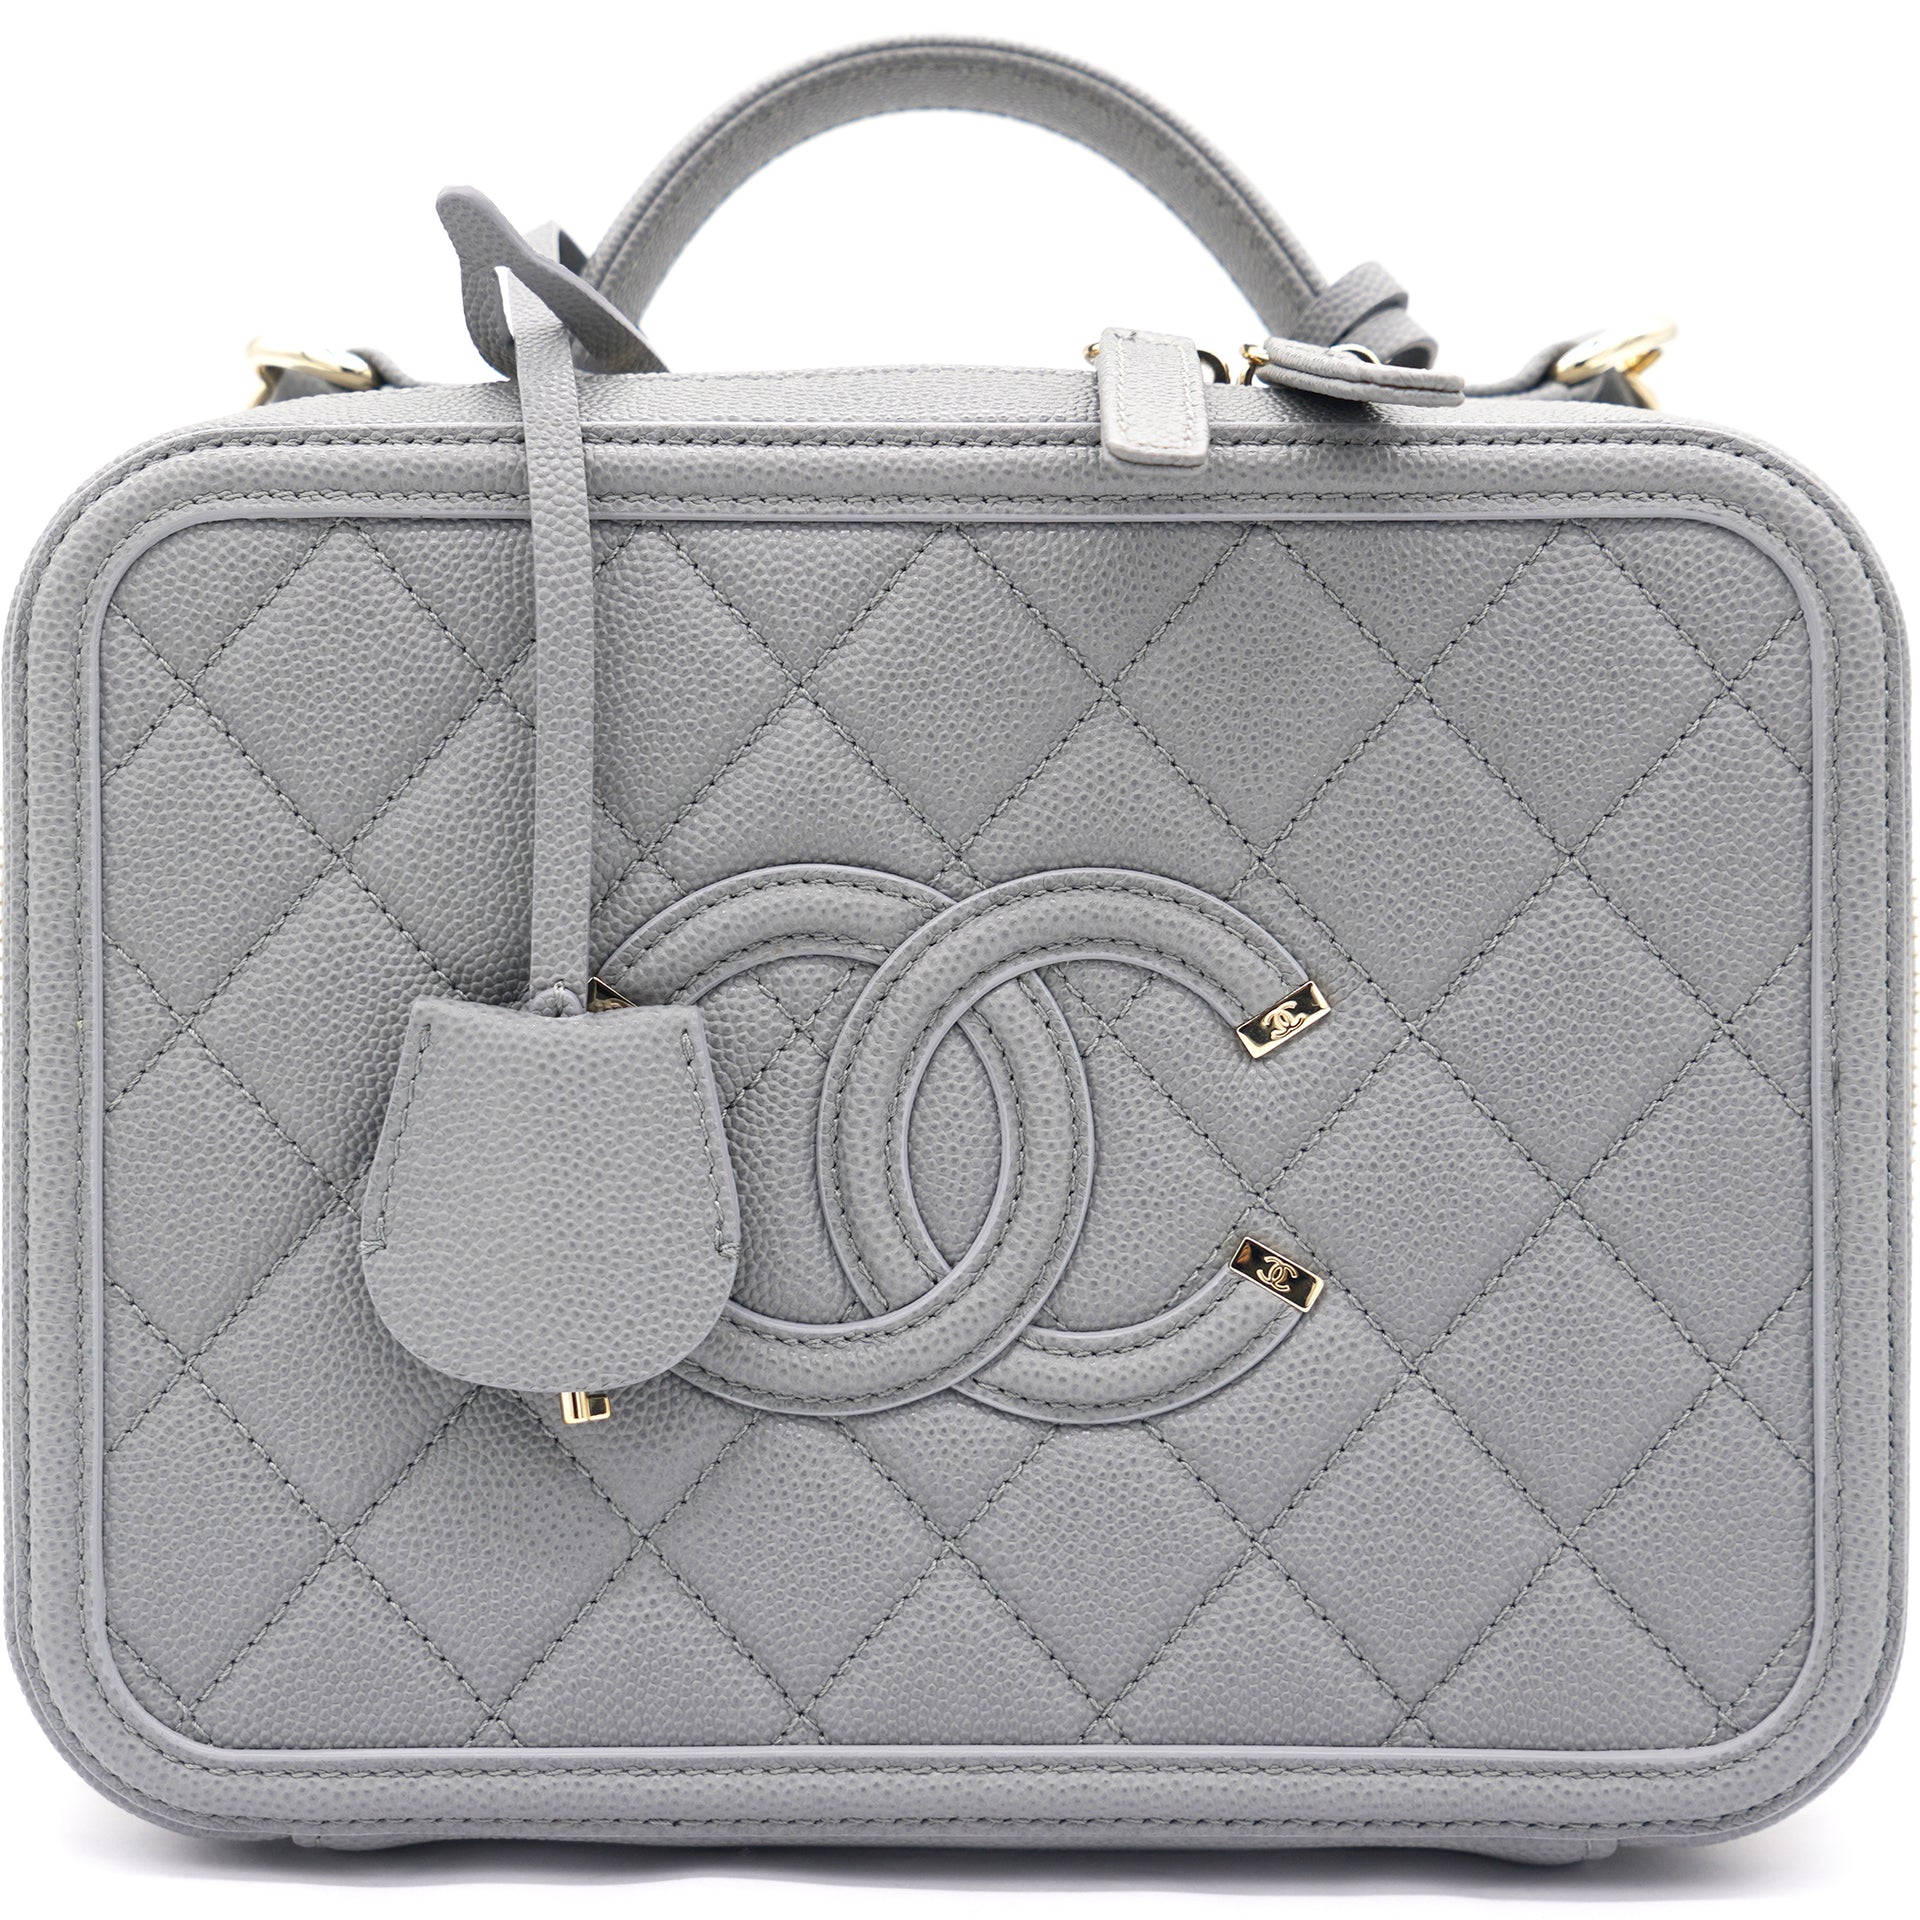 Chanel Beige Quilted Caviar Leather Medium CC Filigree Vanity Case Bag